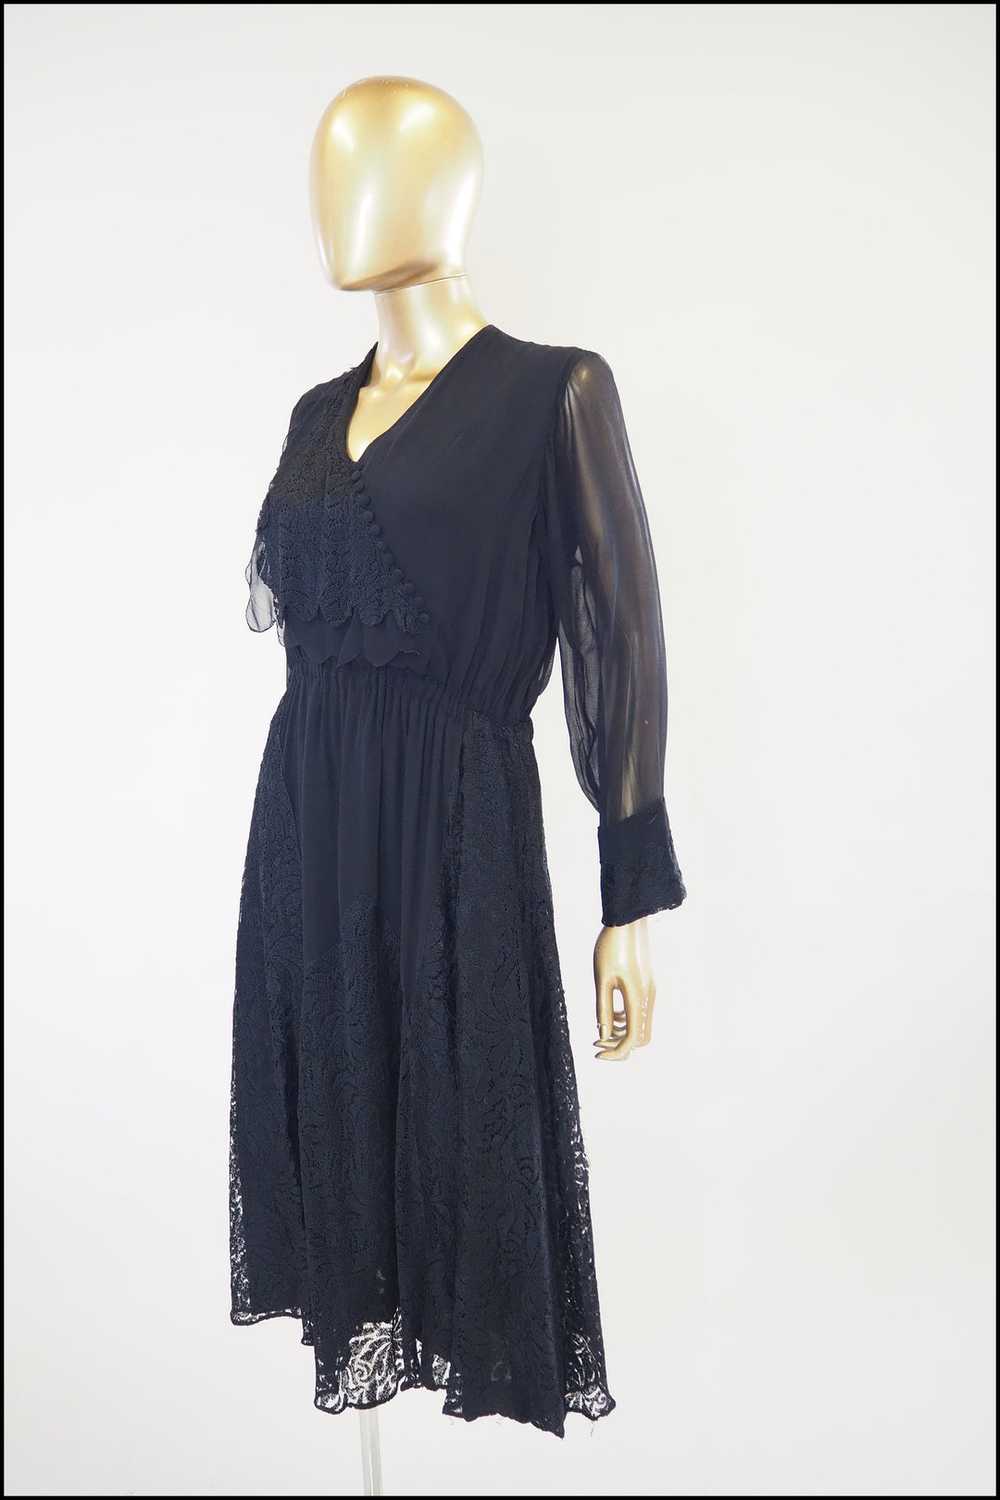 Vintage 1930s Black Chiffon Lace Dress - image 1